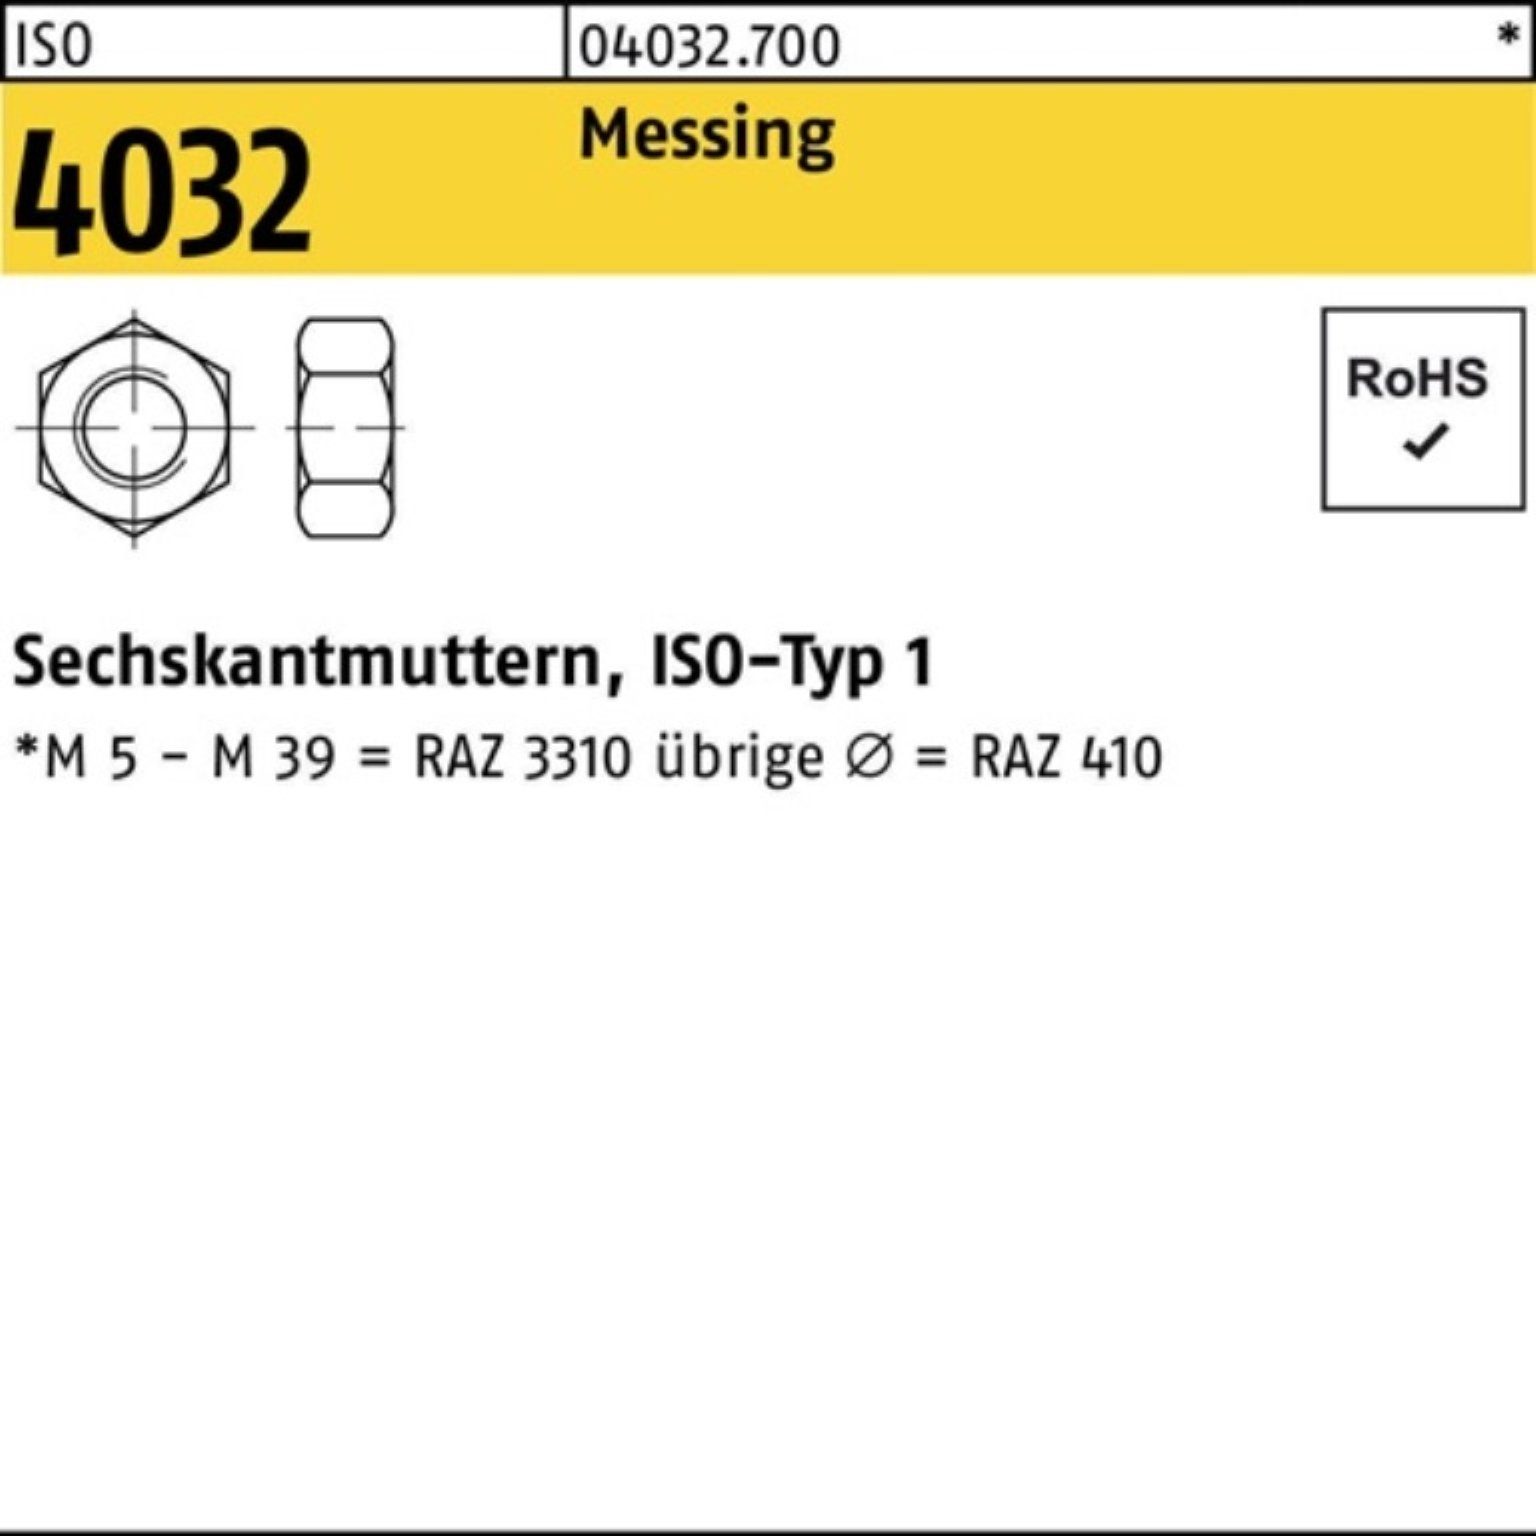 Bufab Muttern 100er ISO Pack Sechskantmutter 100 4032 M2 Stück Messing ISO 4032 Mes